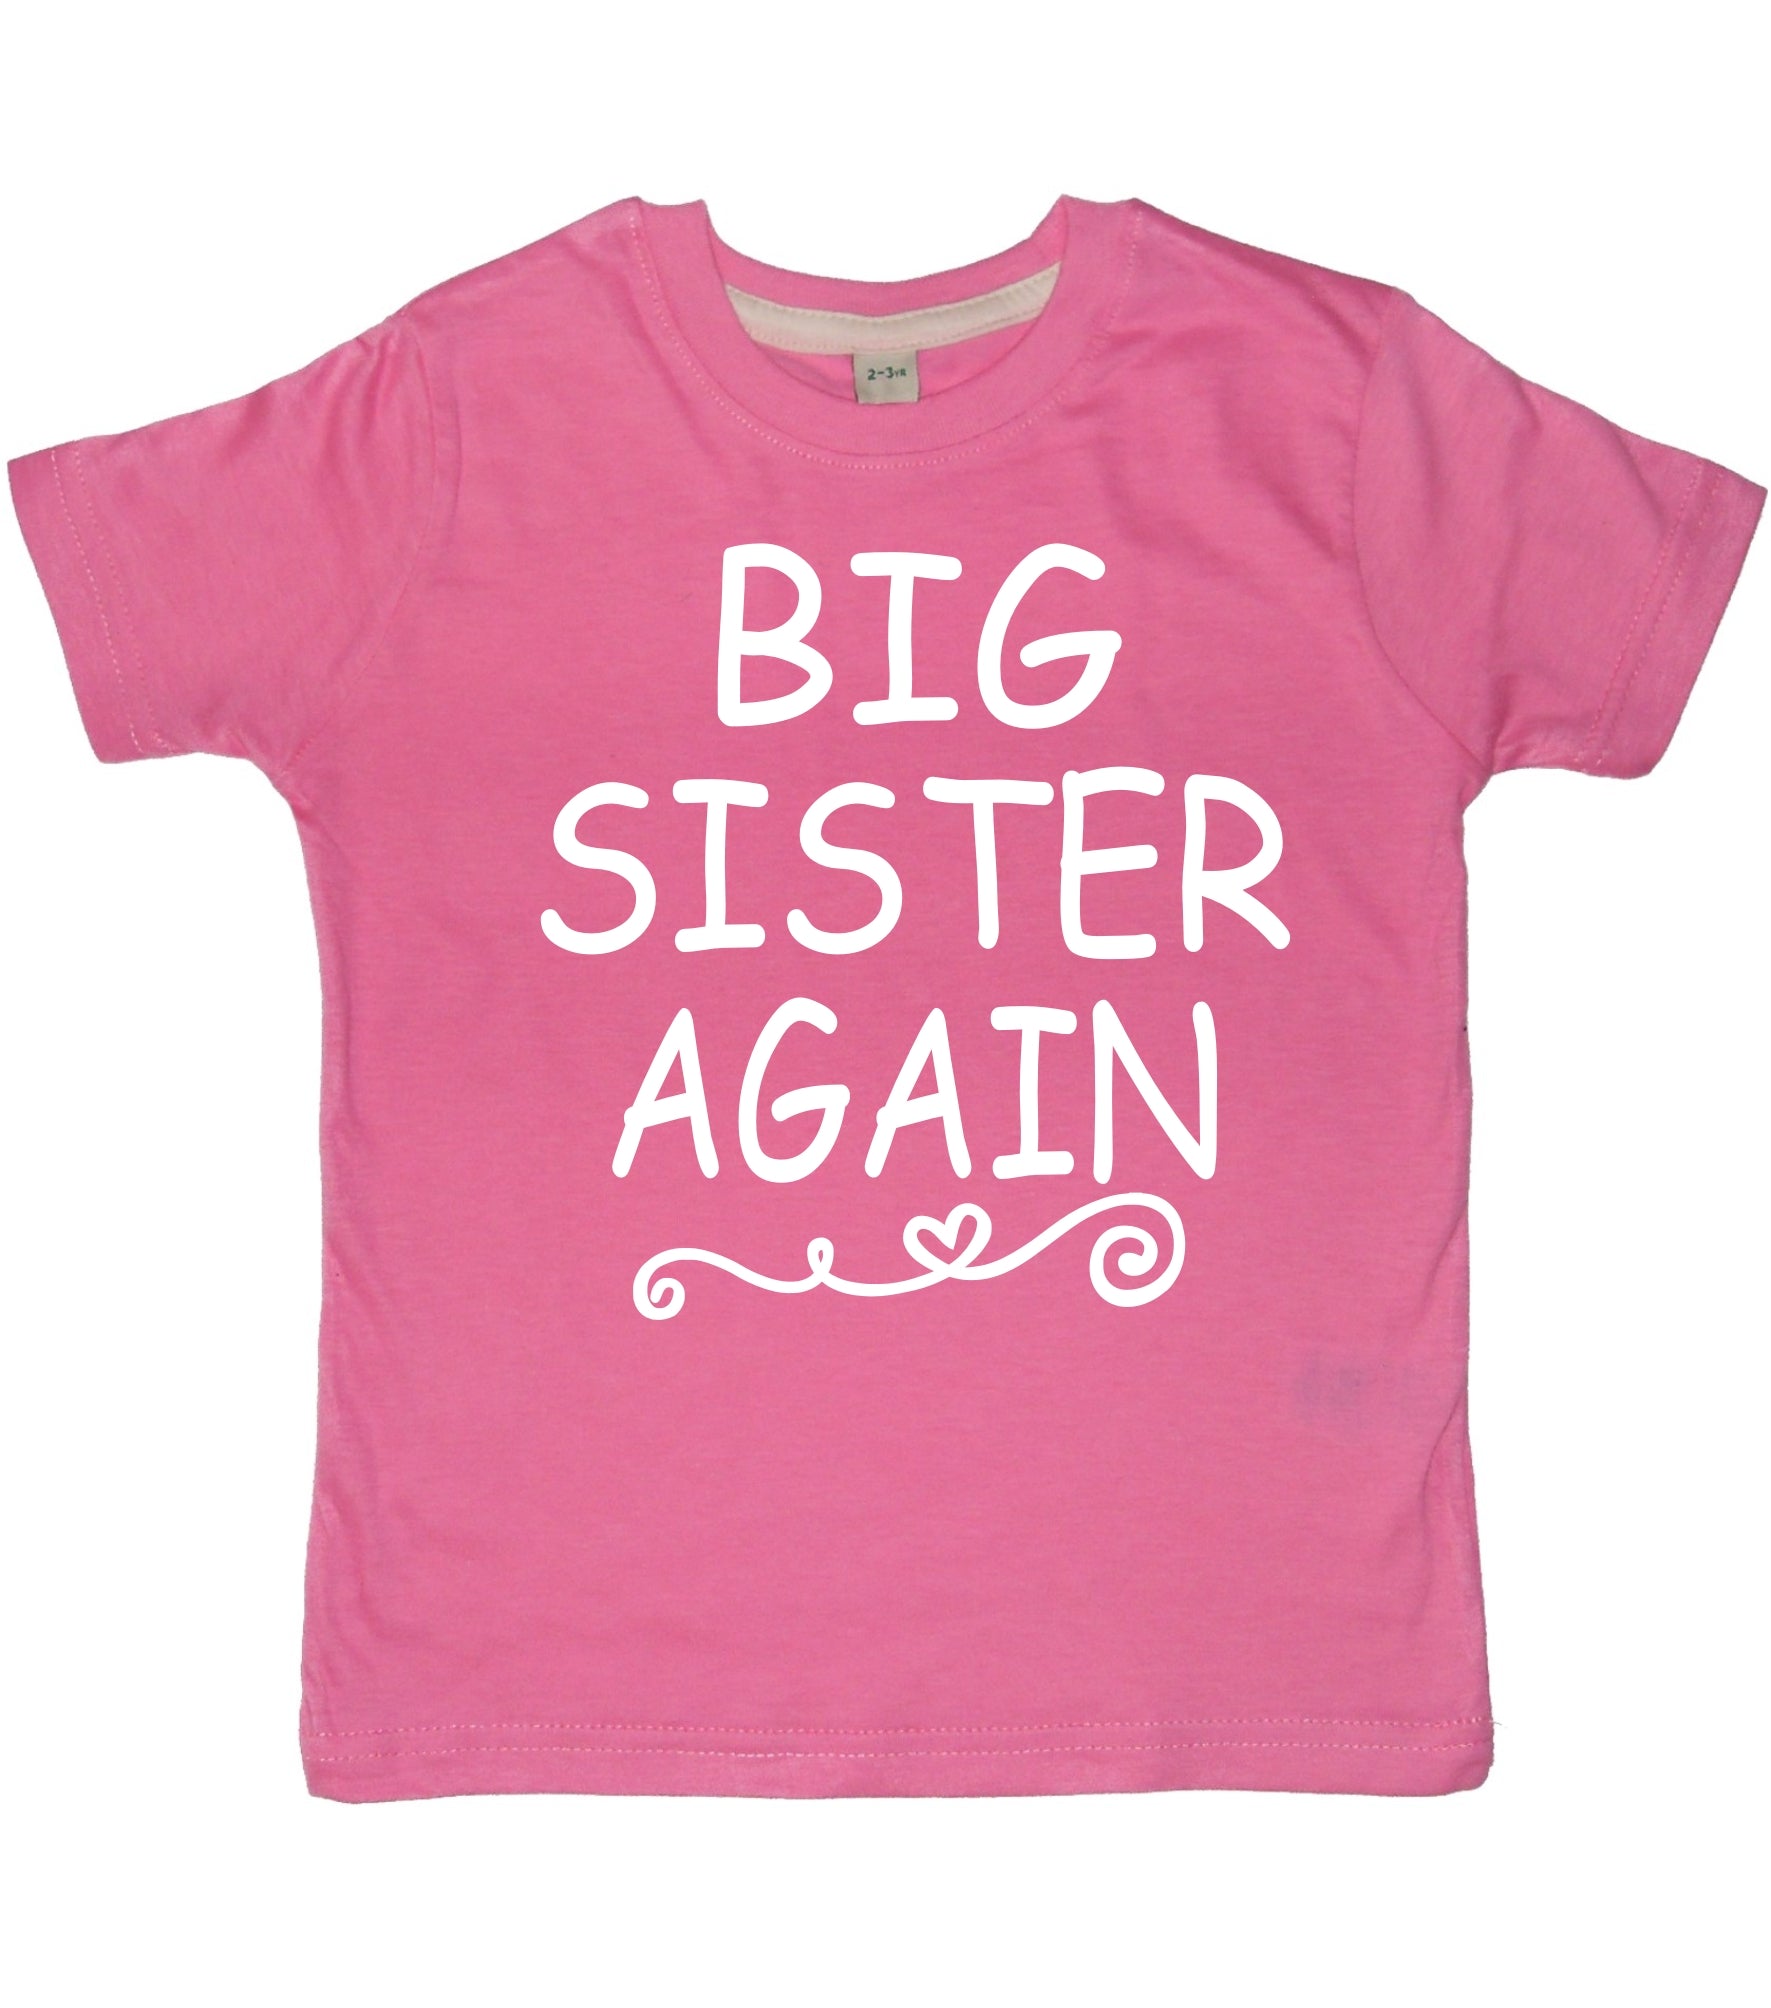 Big Sister Again Bubblegum Pink T Shirt with White Glitter Print